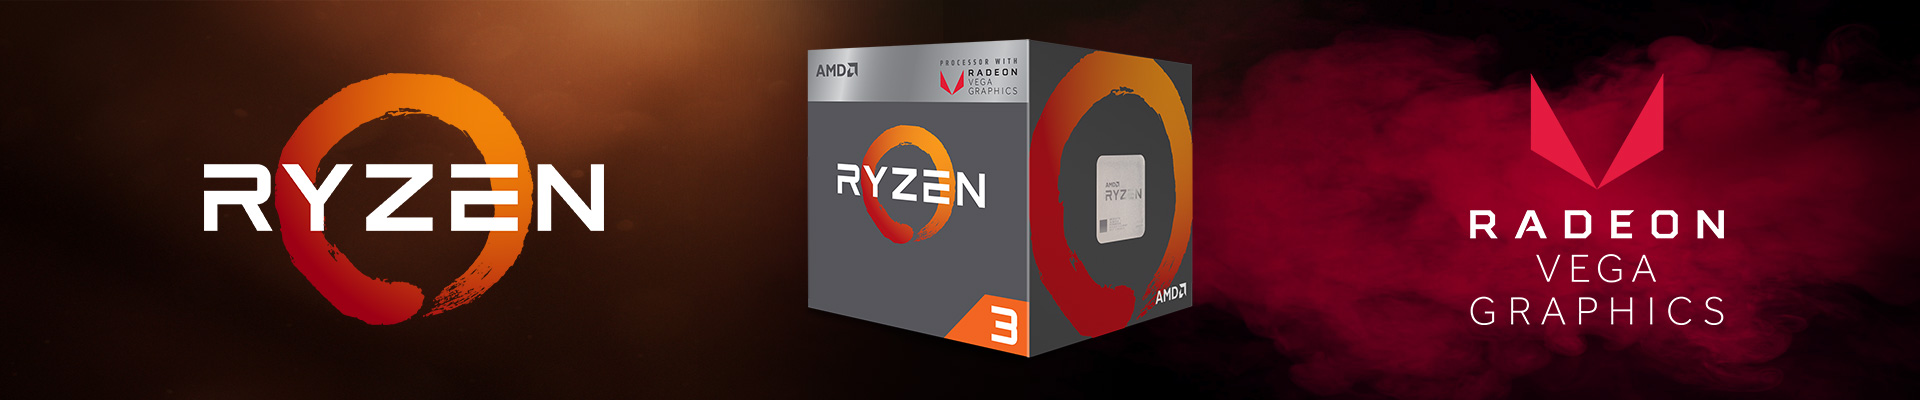 CPU AMD Ryzen 3 2200G 3.5 GHz (3.7 GHz with boost) / 6MB / 4 cores 4 threads / Radeon Vega 8 / socket AM4 giá tốt